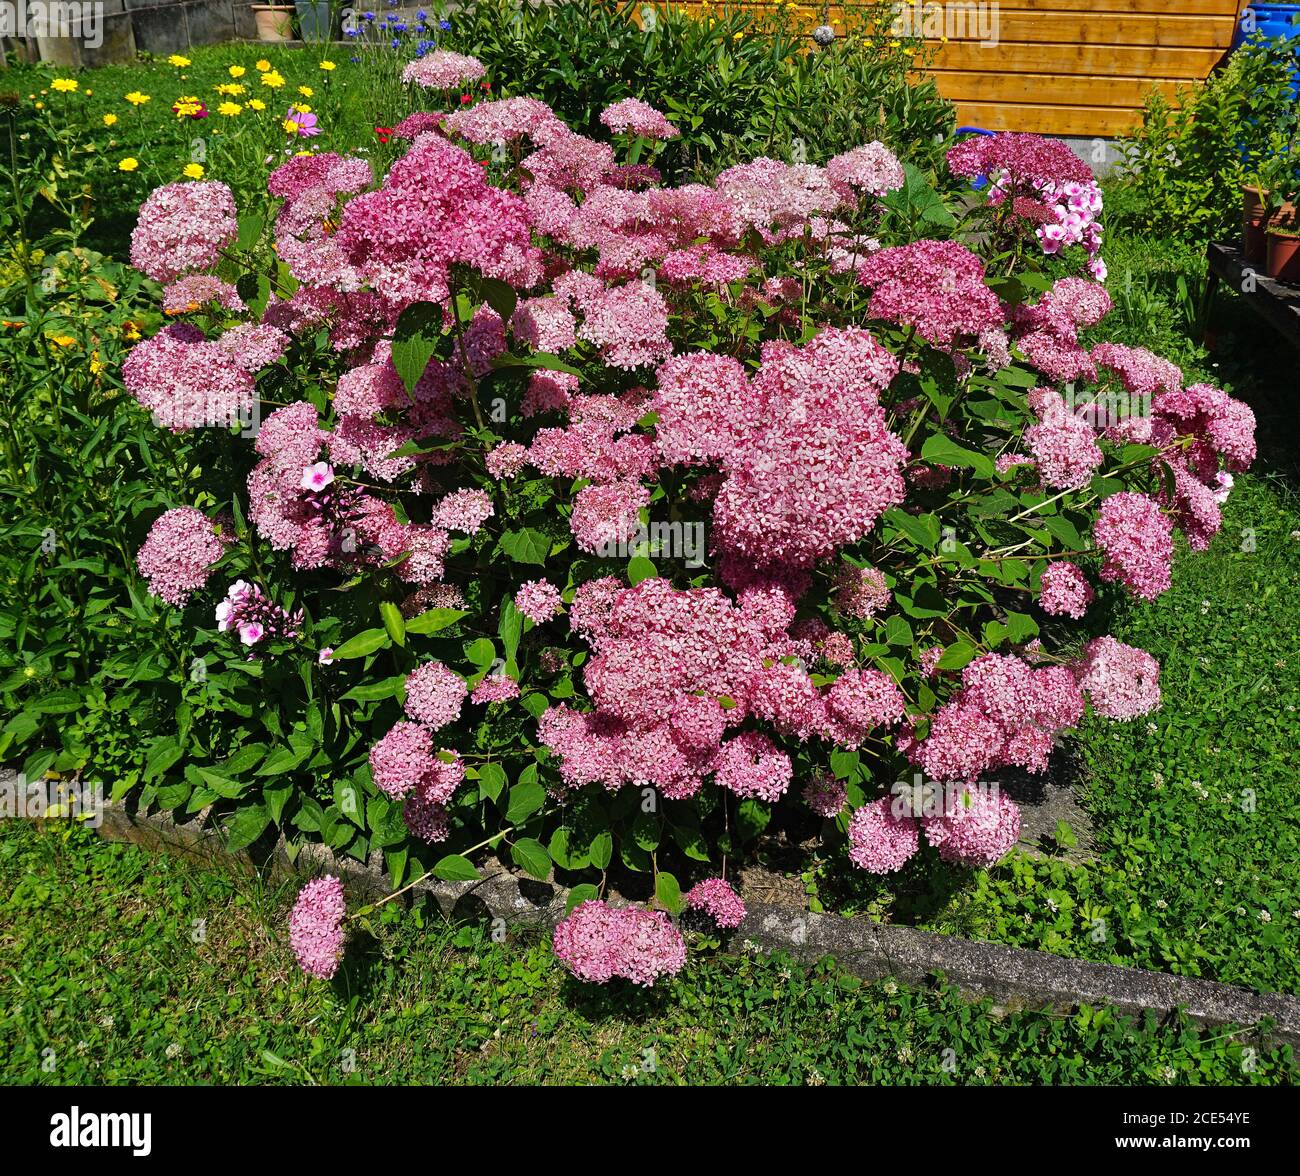 hydrangea, Hydrangea paniculata; Stock Photo